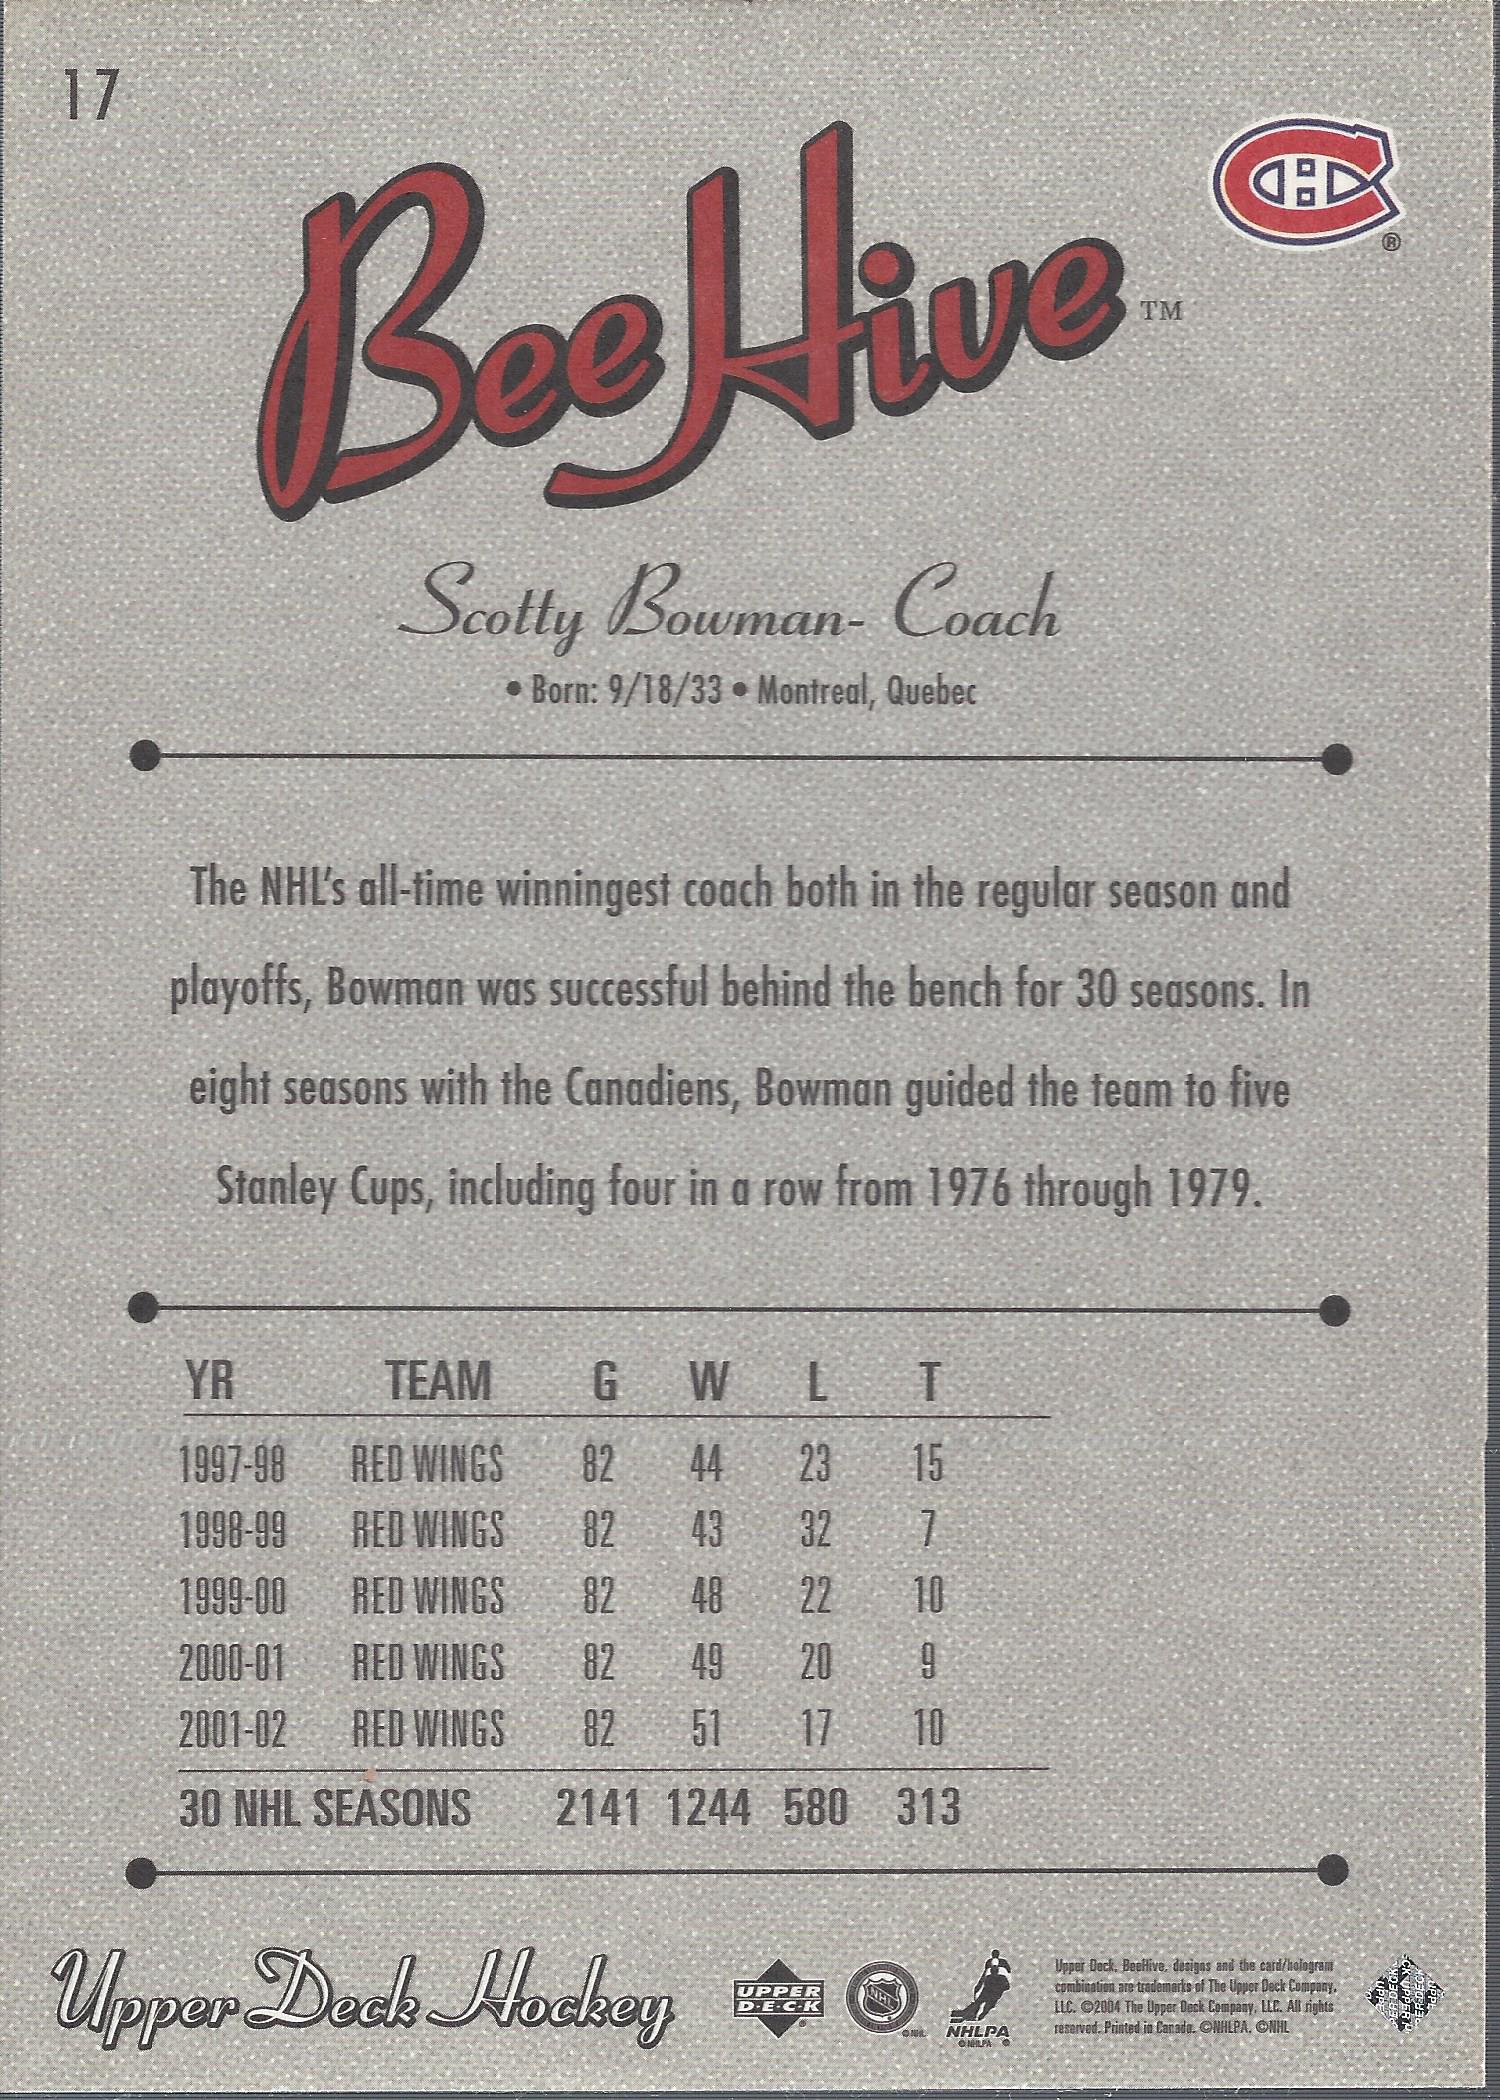 2003-04 Beehive Jumbos #17 Scotty Bowman back image